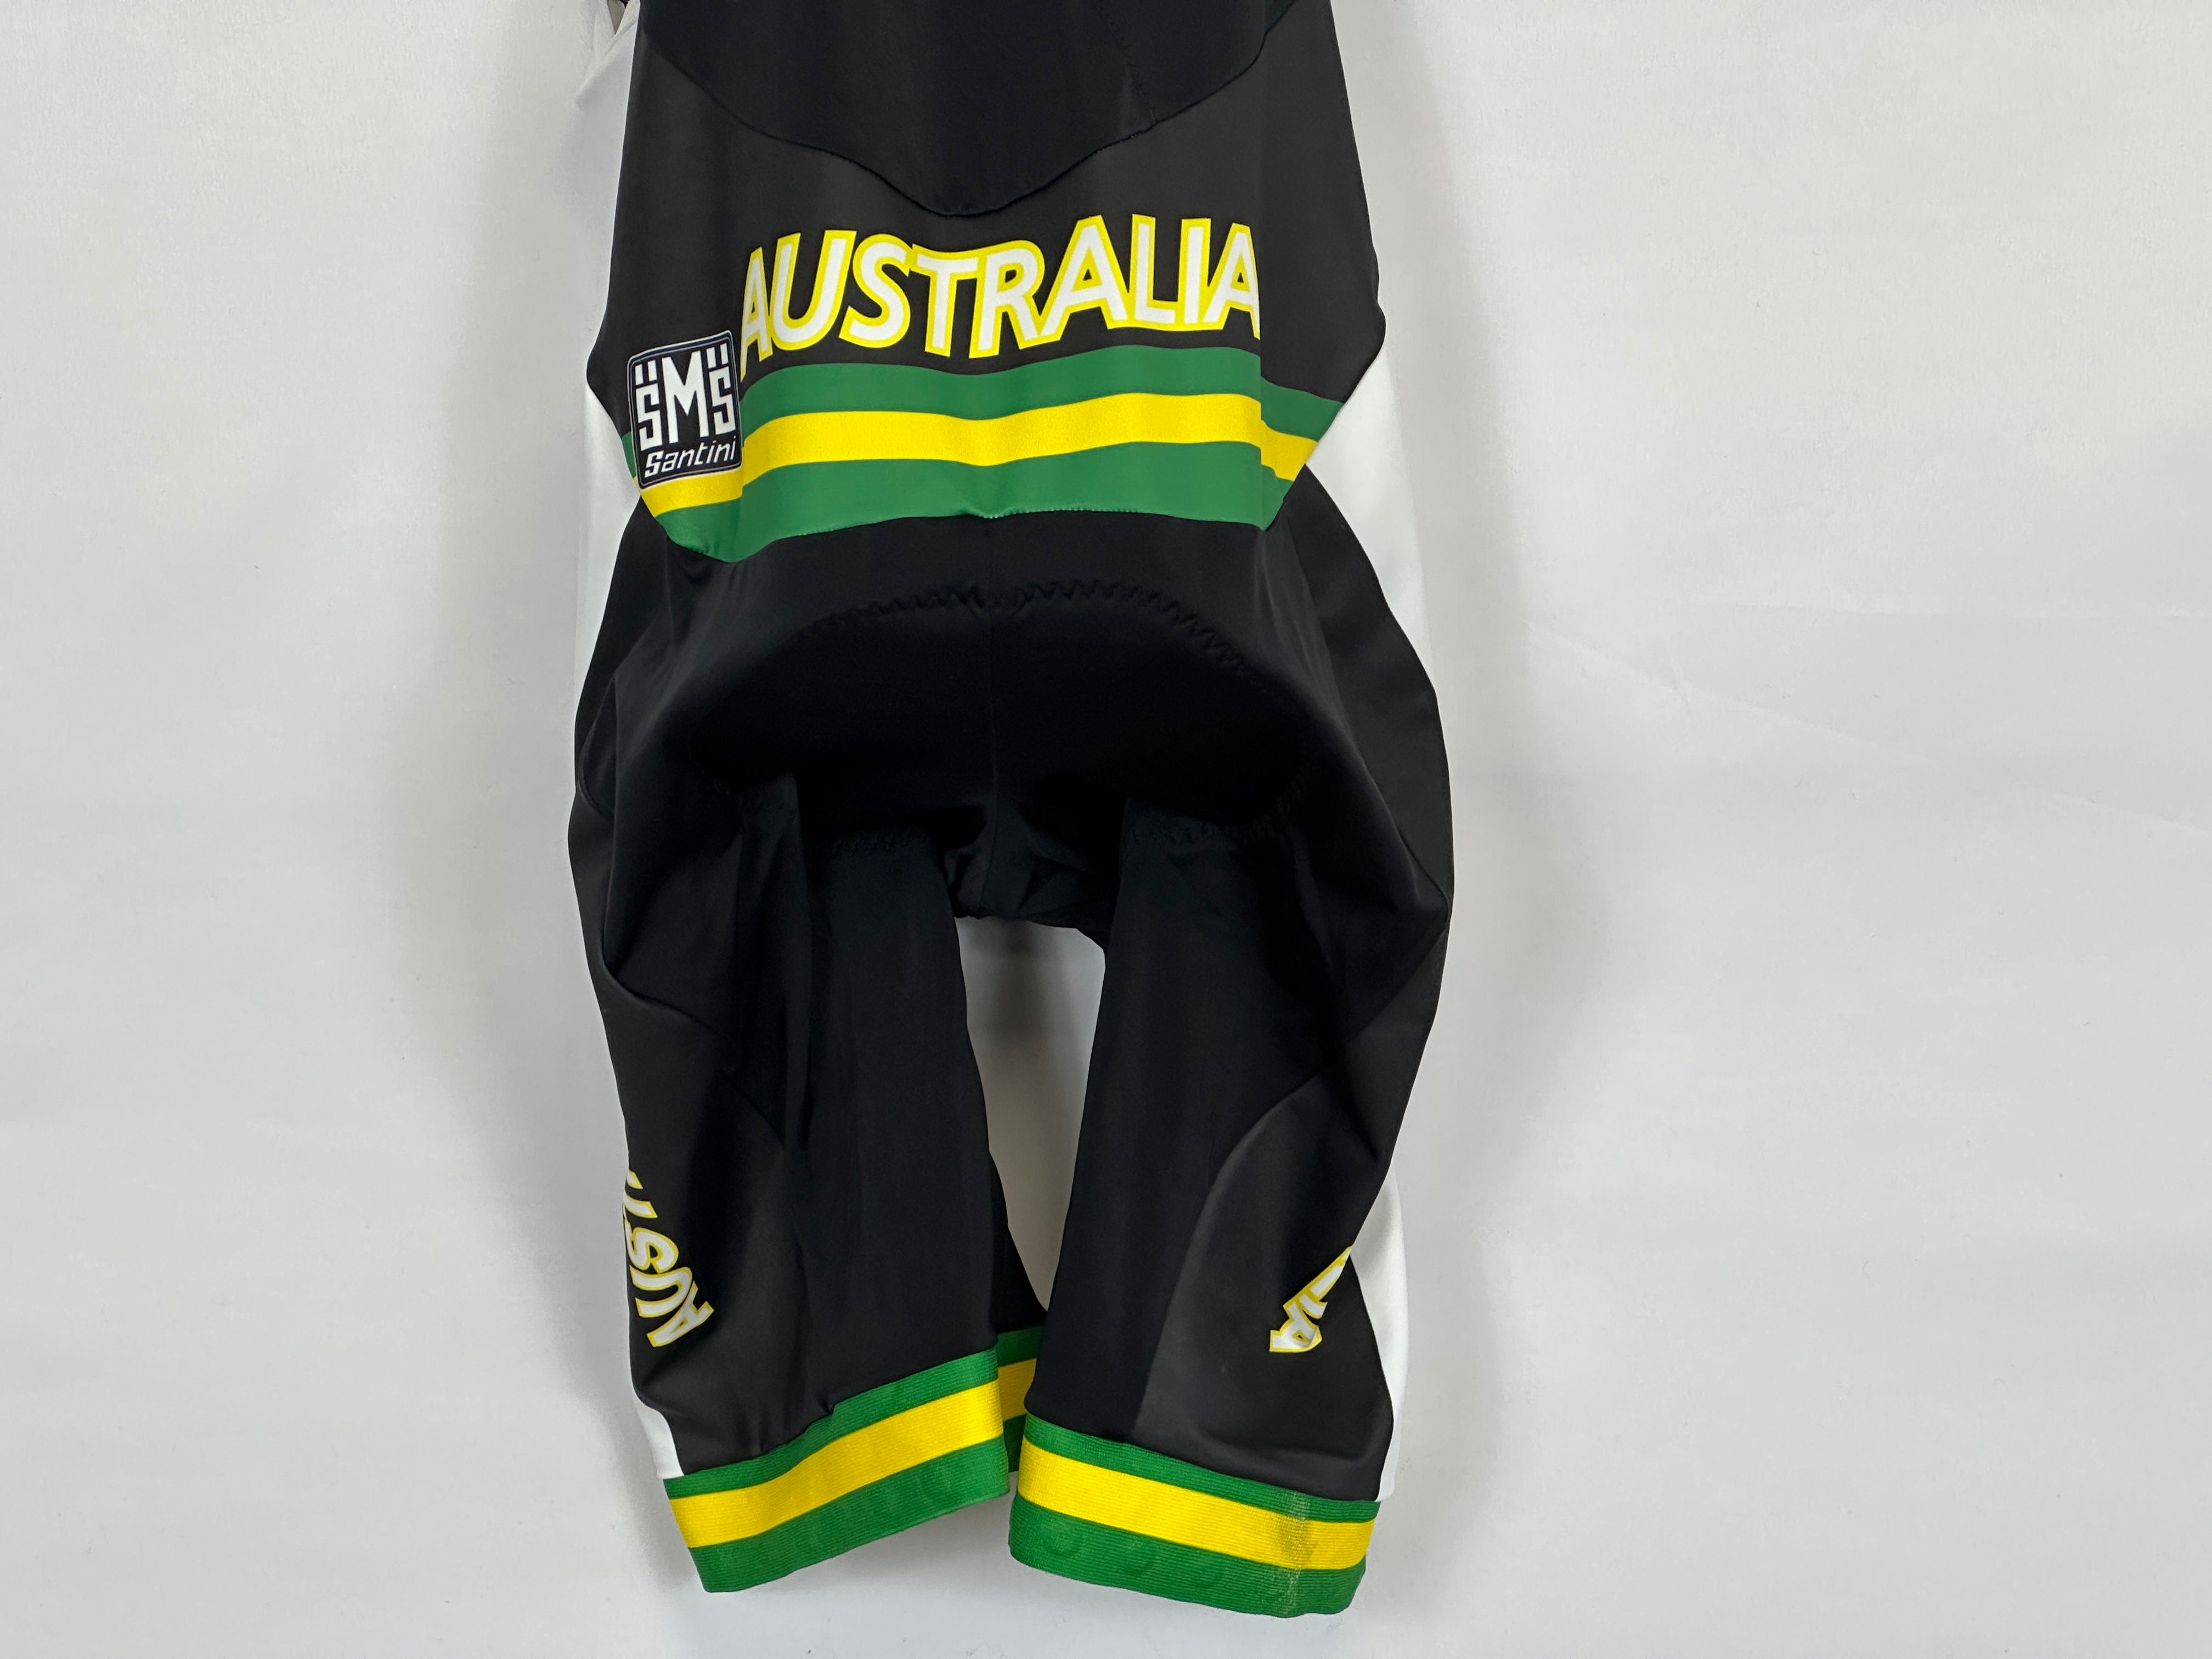 Garmin Cervélo Team - Culotte con tirantes regular del Campeonato Nacional de Australia de Santini